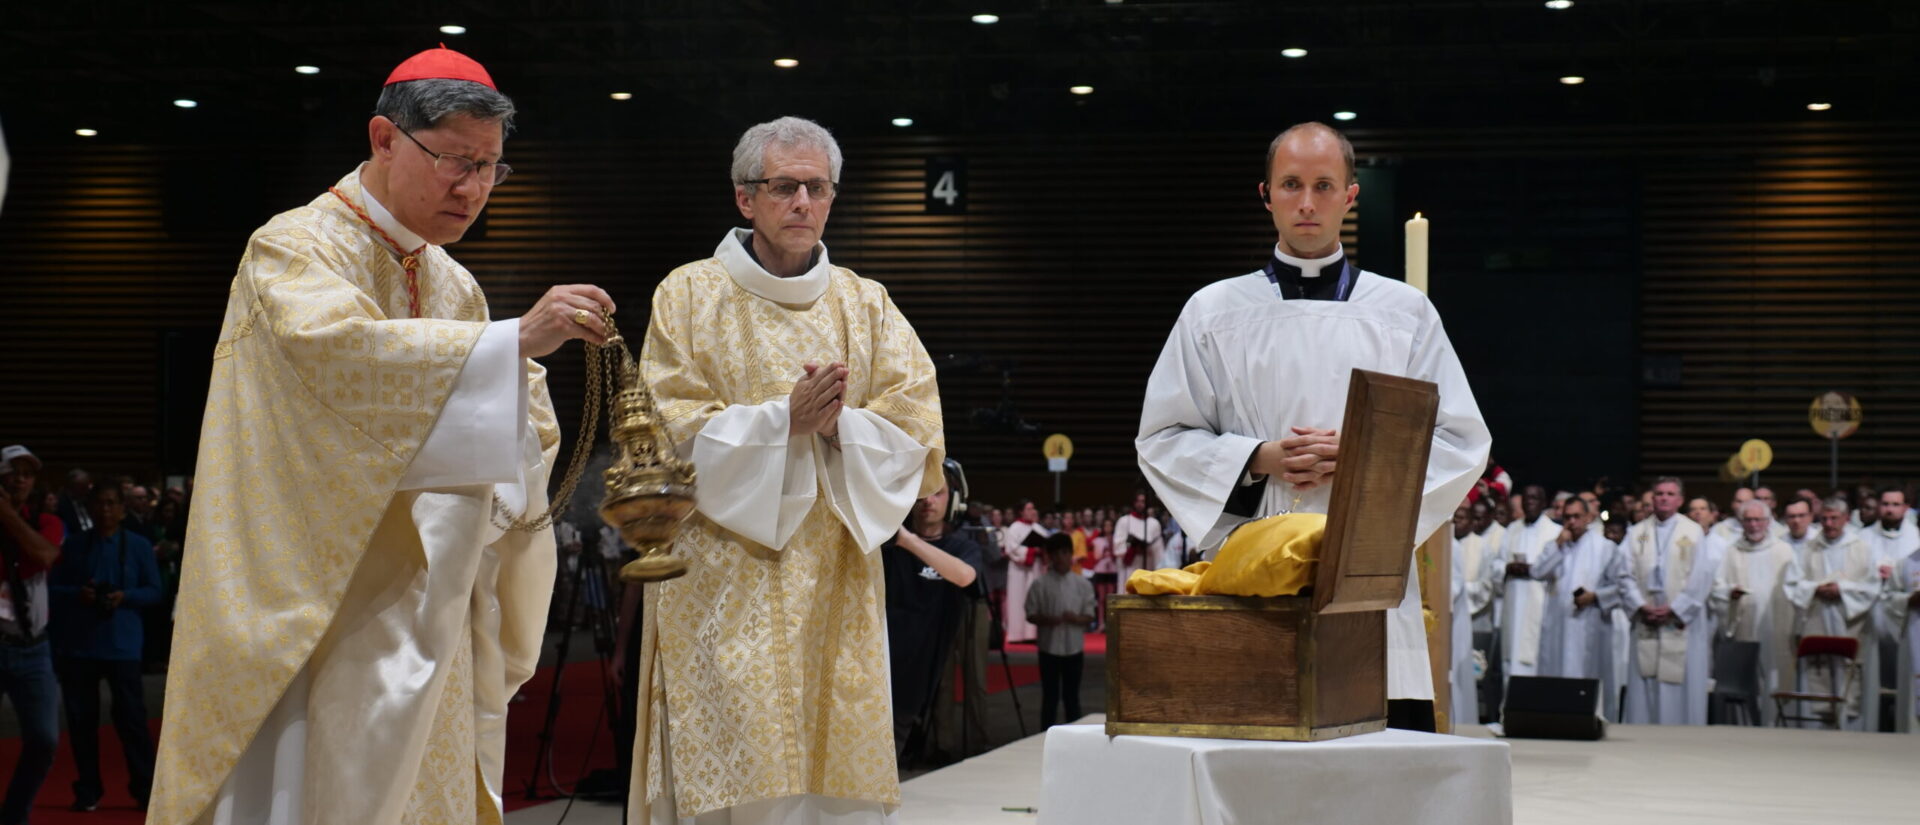 Le cardinal Antonio Tagle a présidé la messe de béatification de Paulin Jaricot, le 22 mai 2022 à Lyon | © Missio Suisse